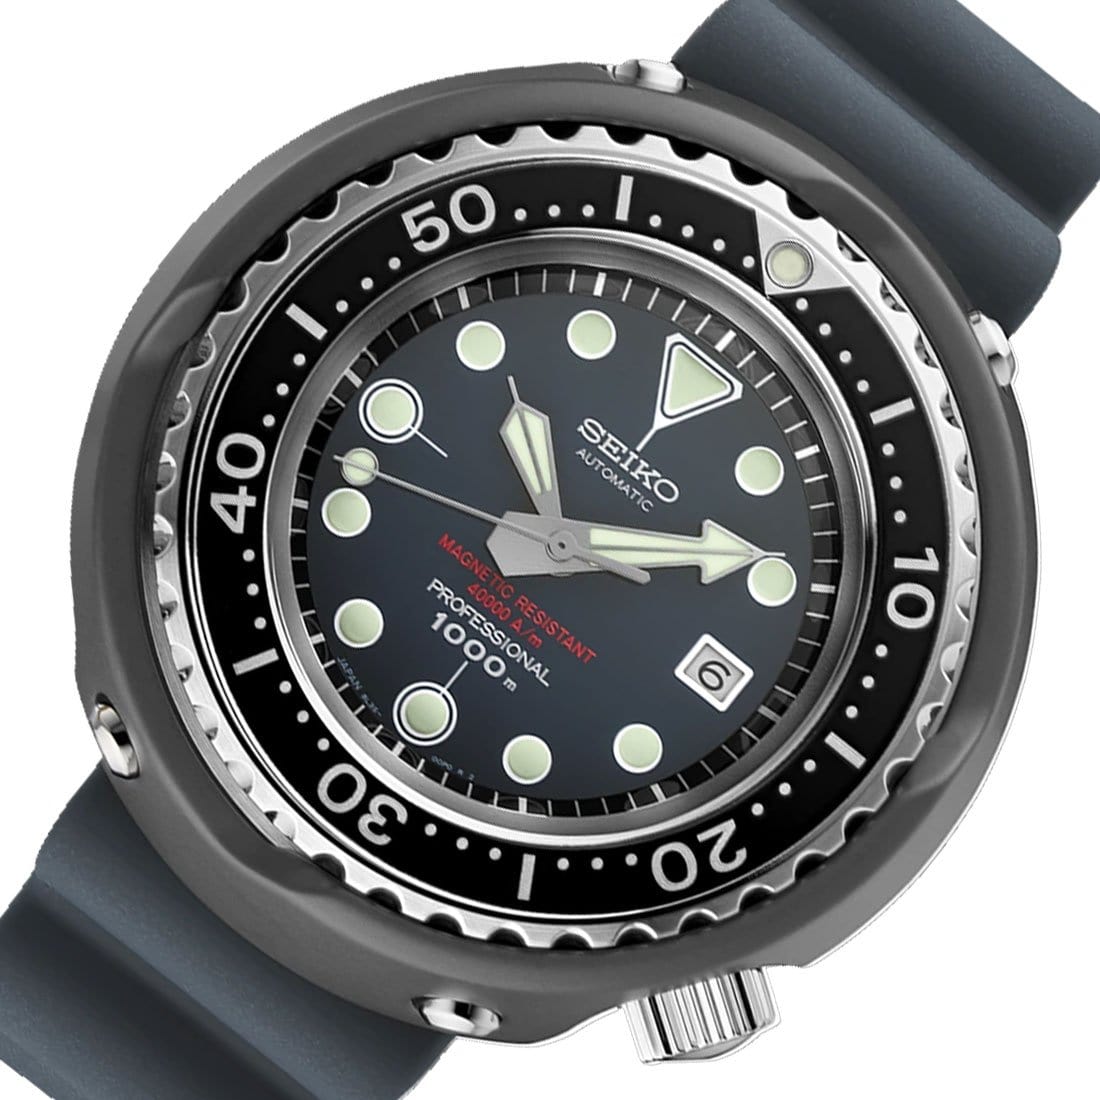 SBDX035 SLA041J1 SLA041J SLA041 Seiko PROSPEX Professional 1000M Japan Domestic Model Watch